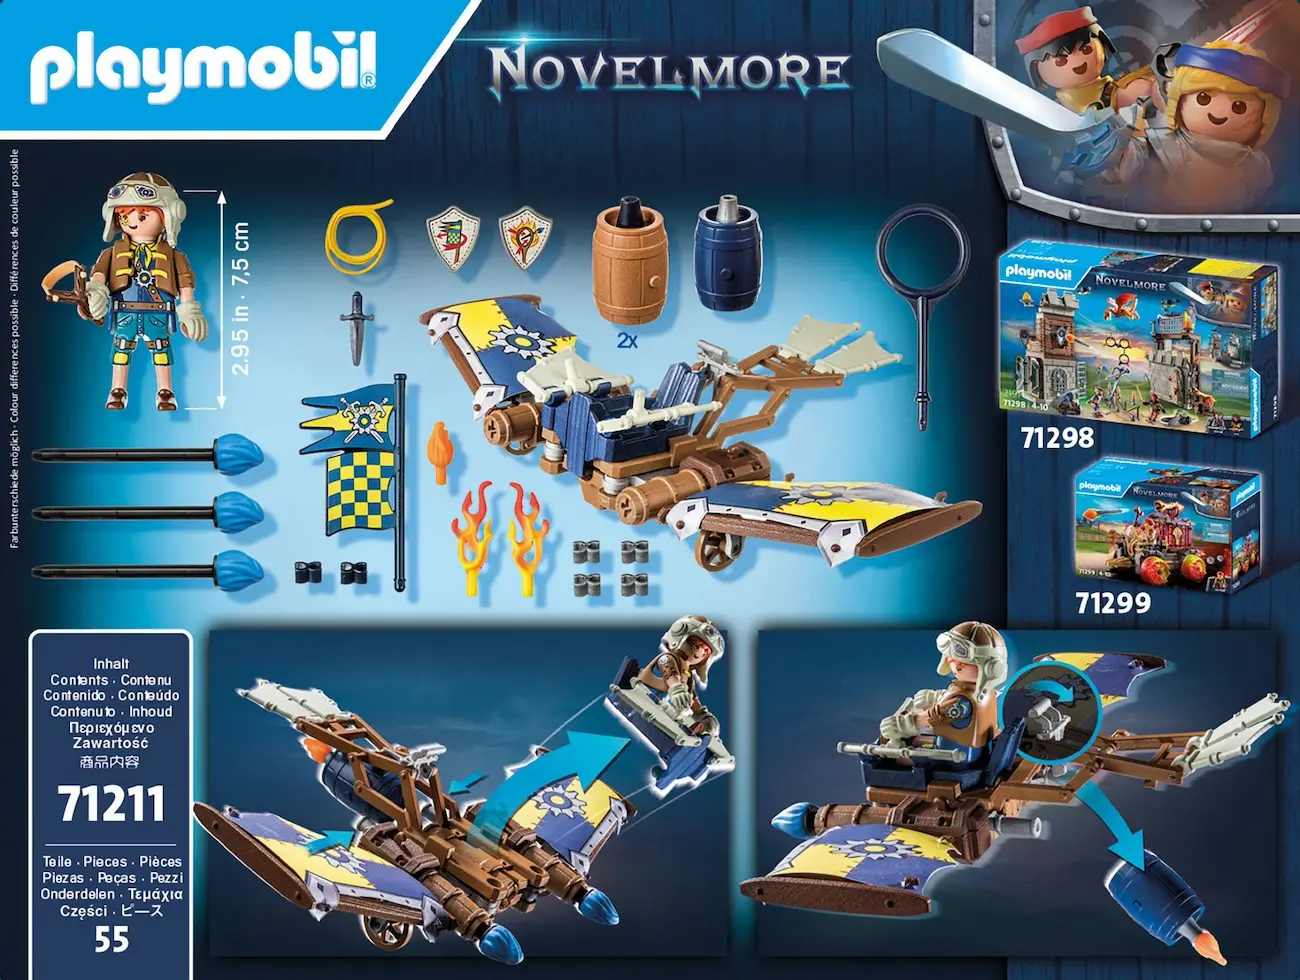 Playmobil 71211 - Darios Fluggleiter - Novelmore